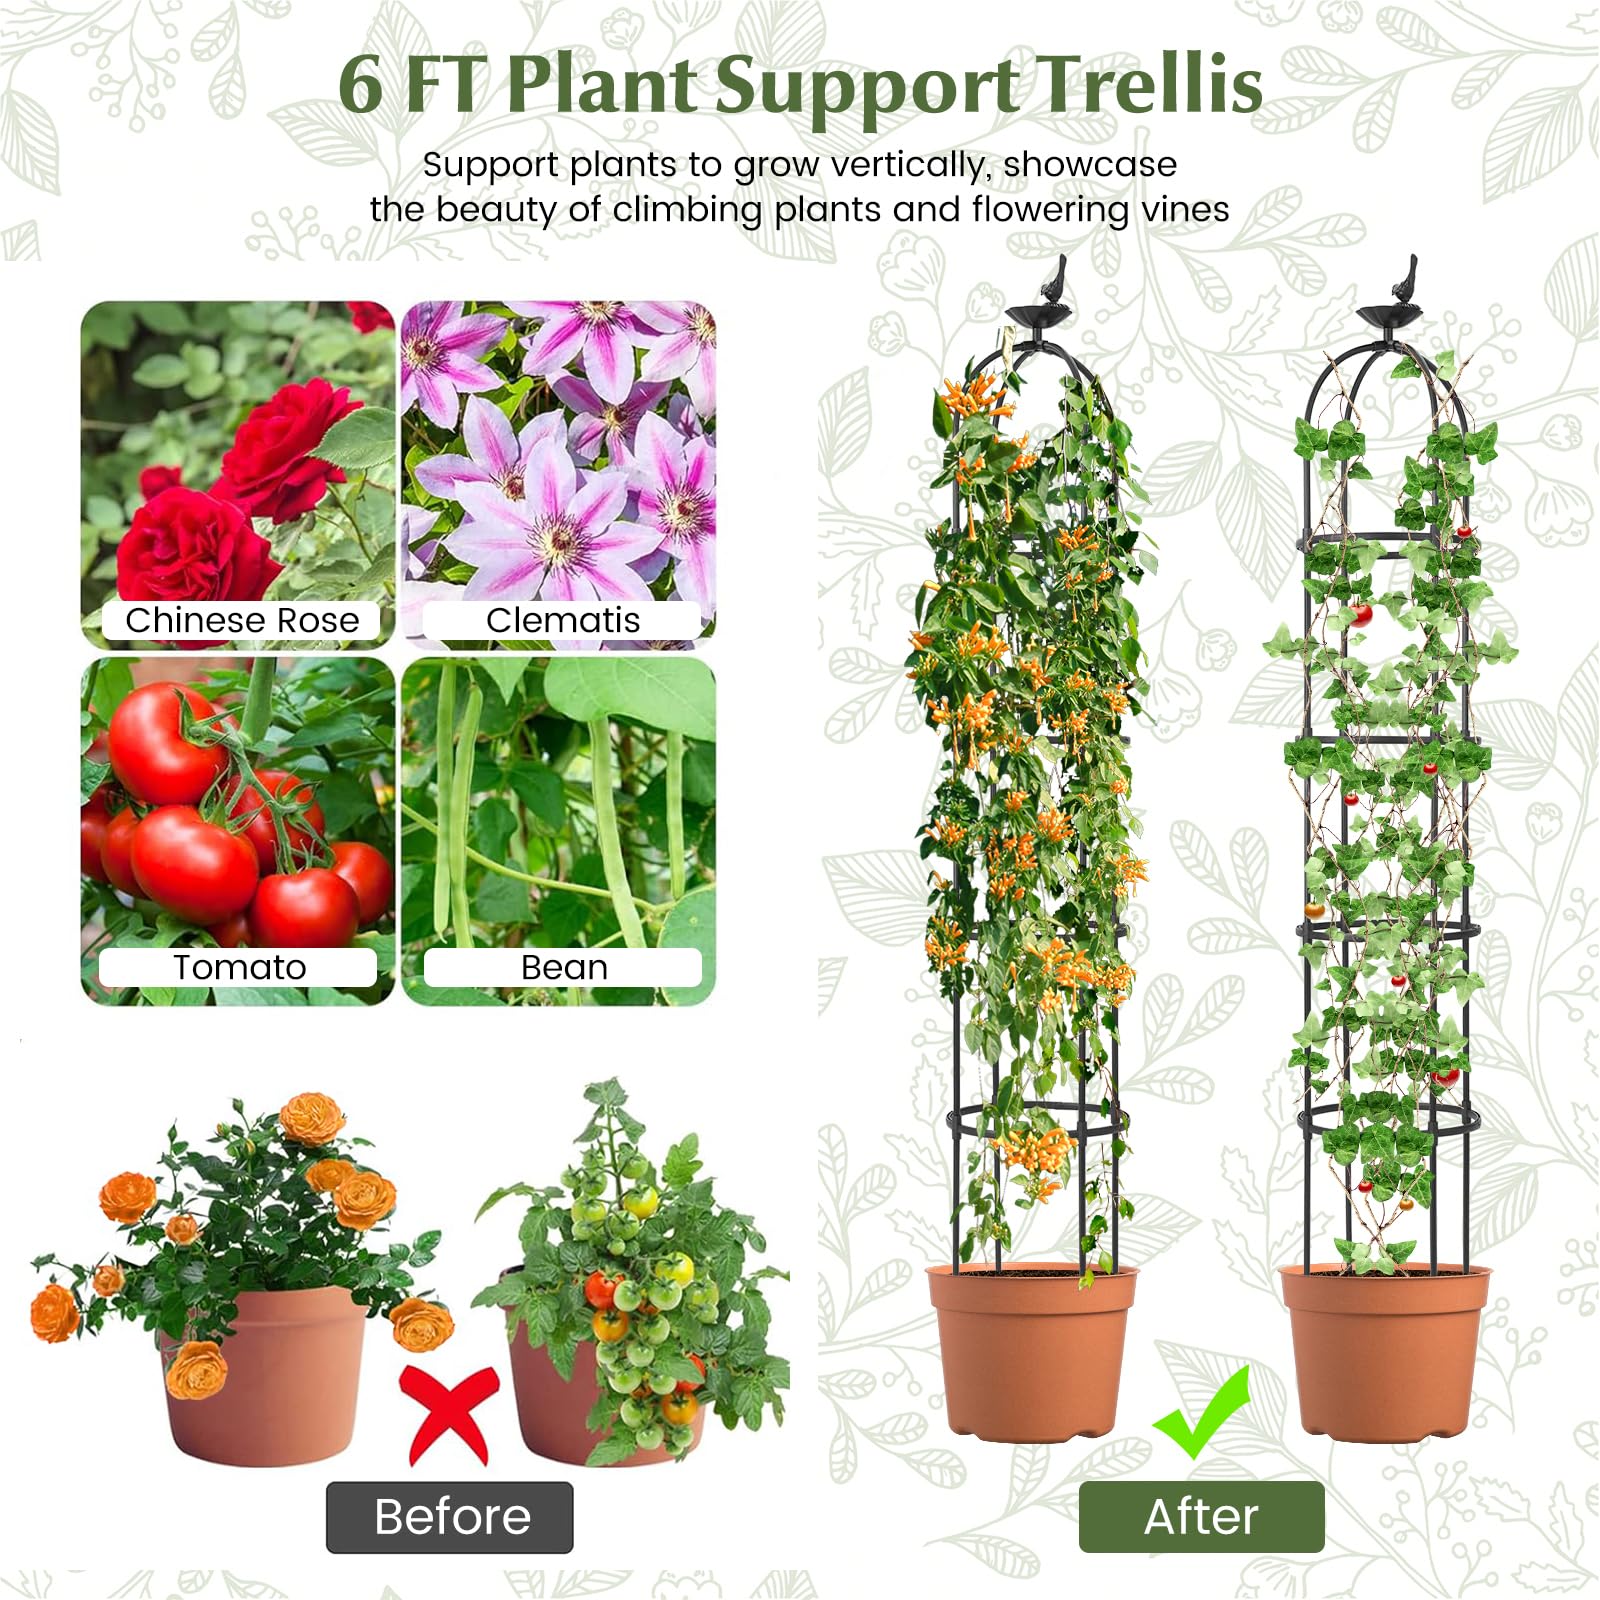 Giantex 2-Pack Tomato Cages, 69” PE-Coated Metal Garden Obelisk Trellis for Climbing Plants